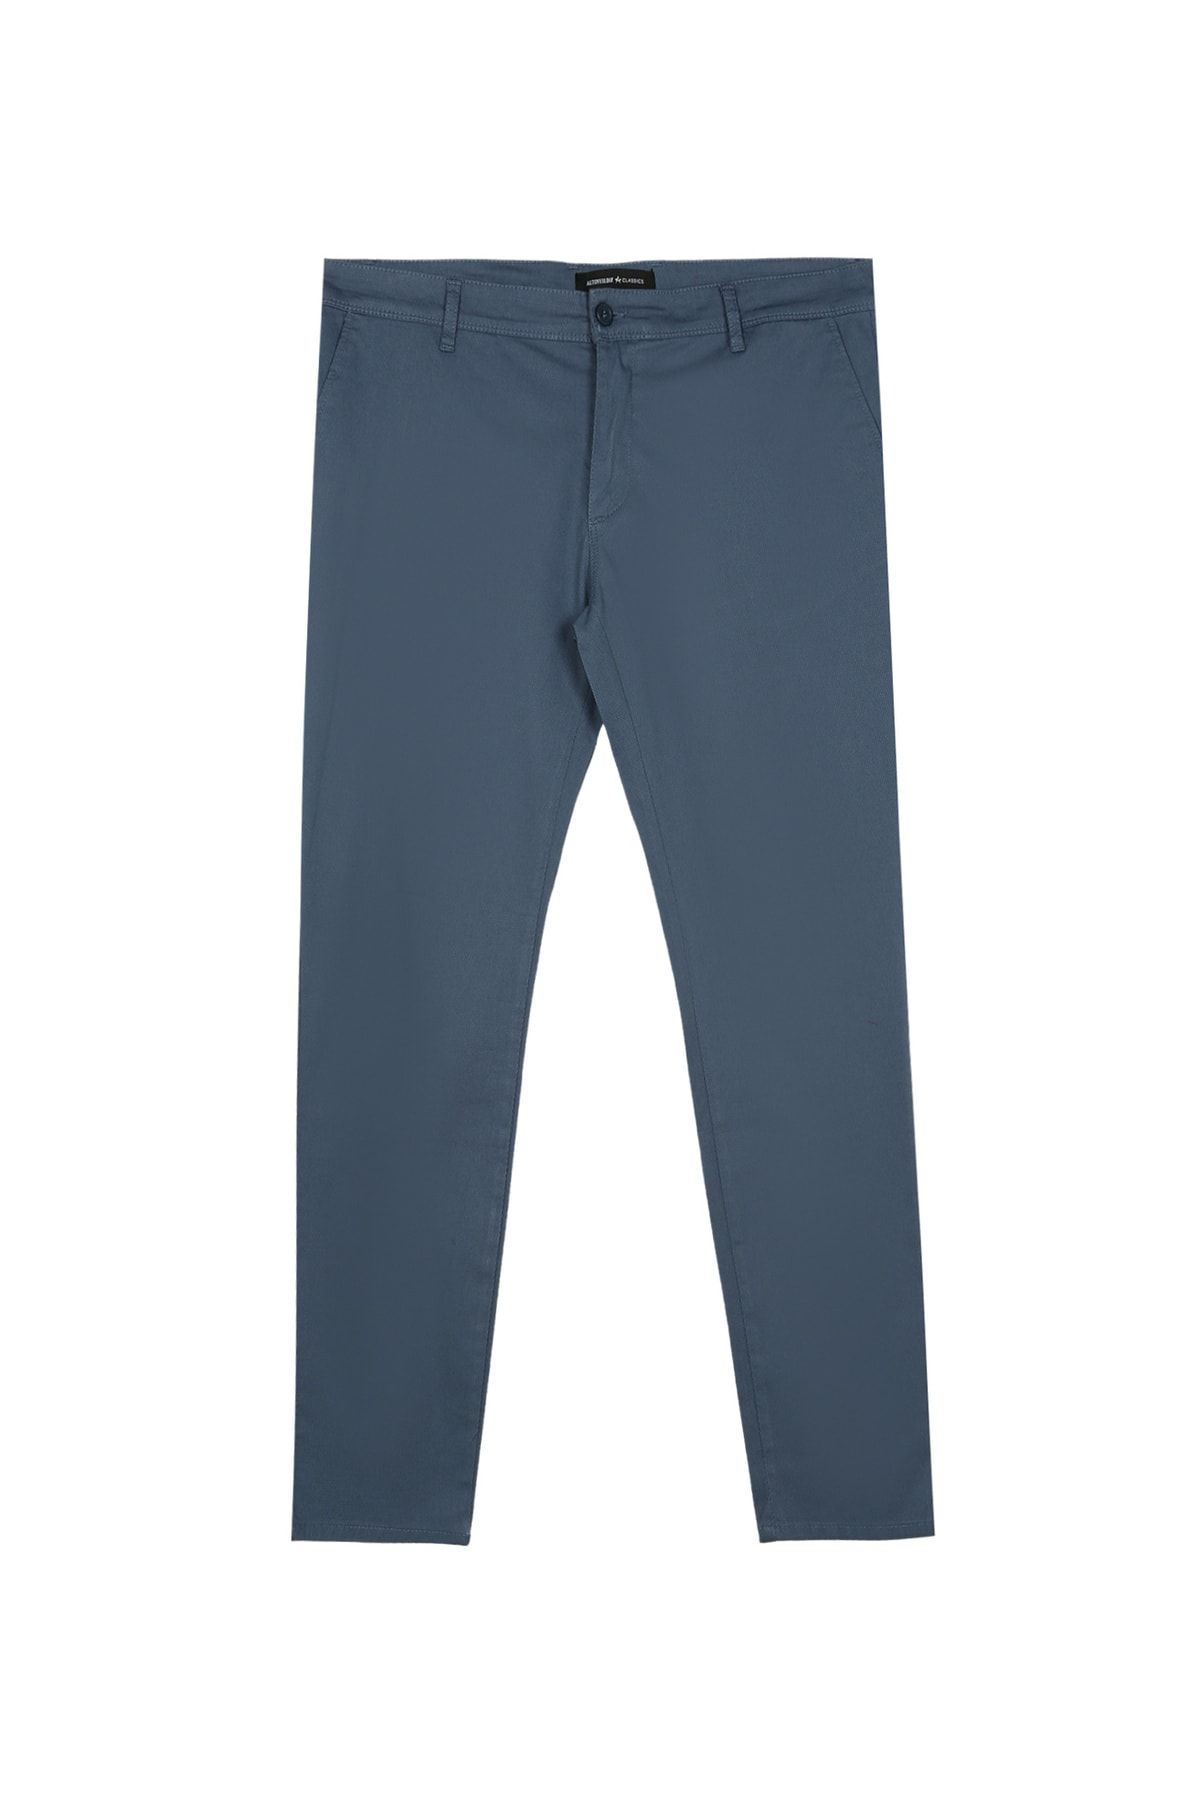 Altınyıldız Classics Altınyıldız Classics Normal Bel Dar Paça Slim Fit Mavi Erkek Pantolon 4A0123200091